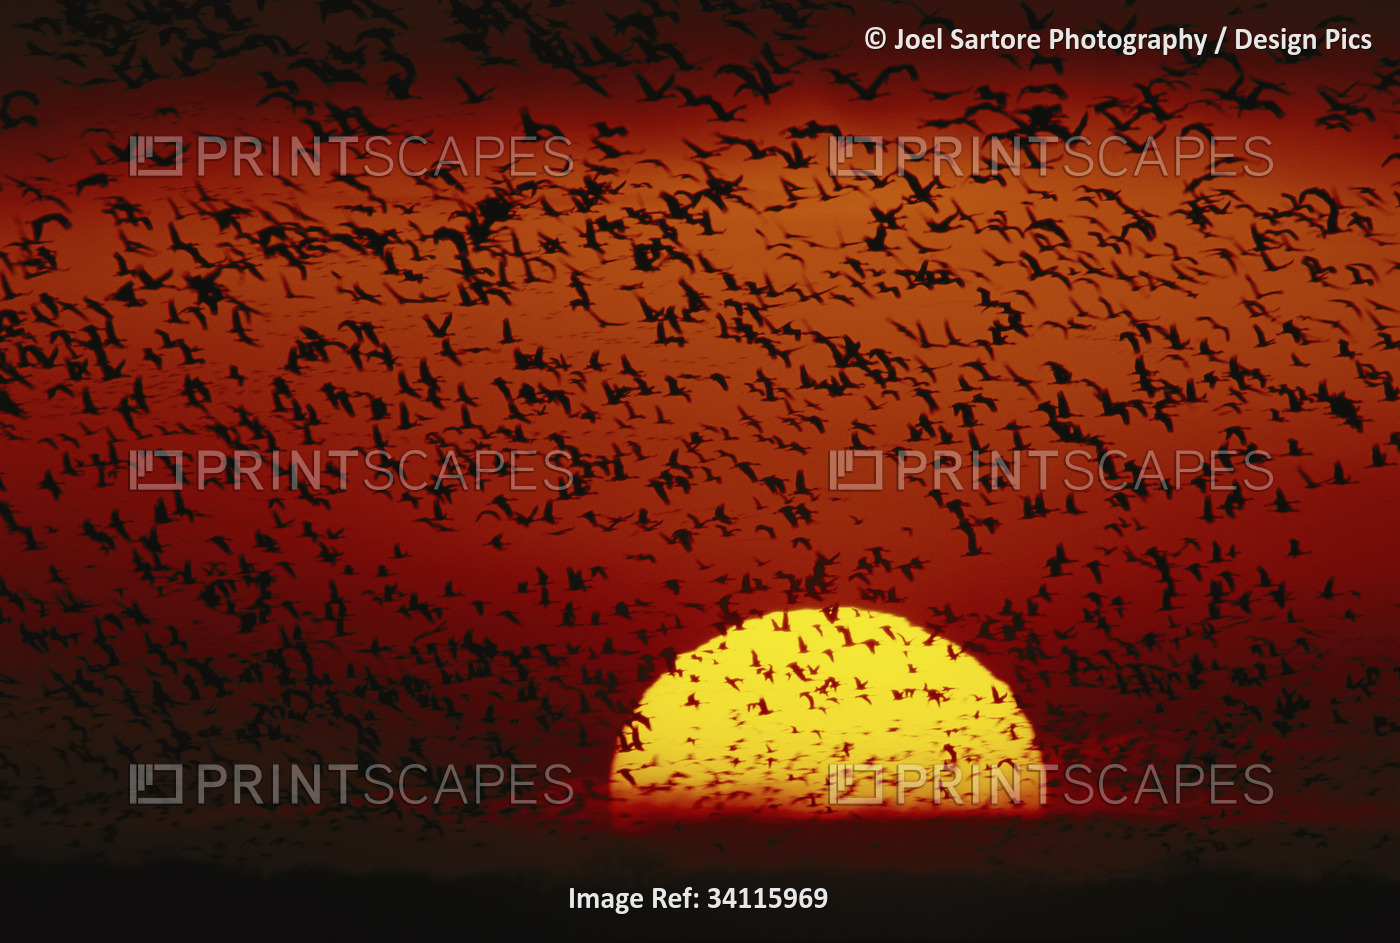 Dramatic flock of birds flying in sunset sky